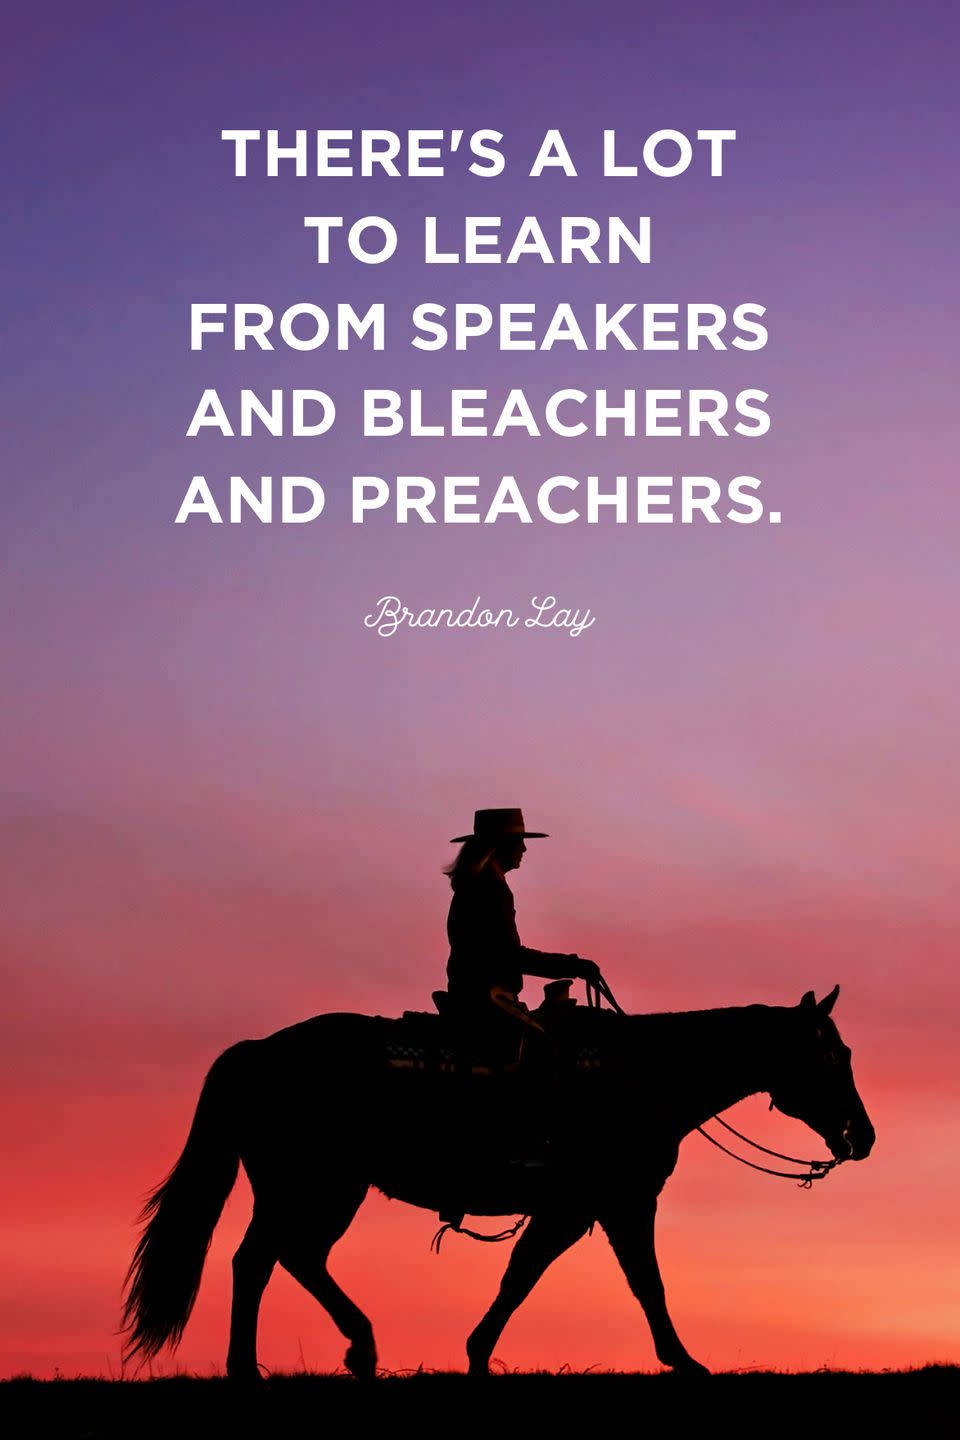 Brandon Lay, "Speakers, Bleachers and Preachers"